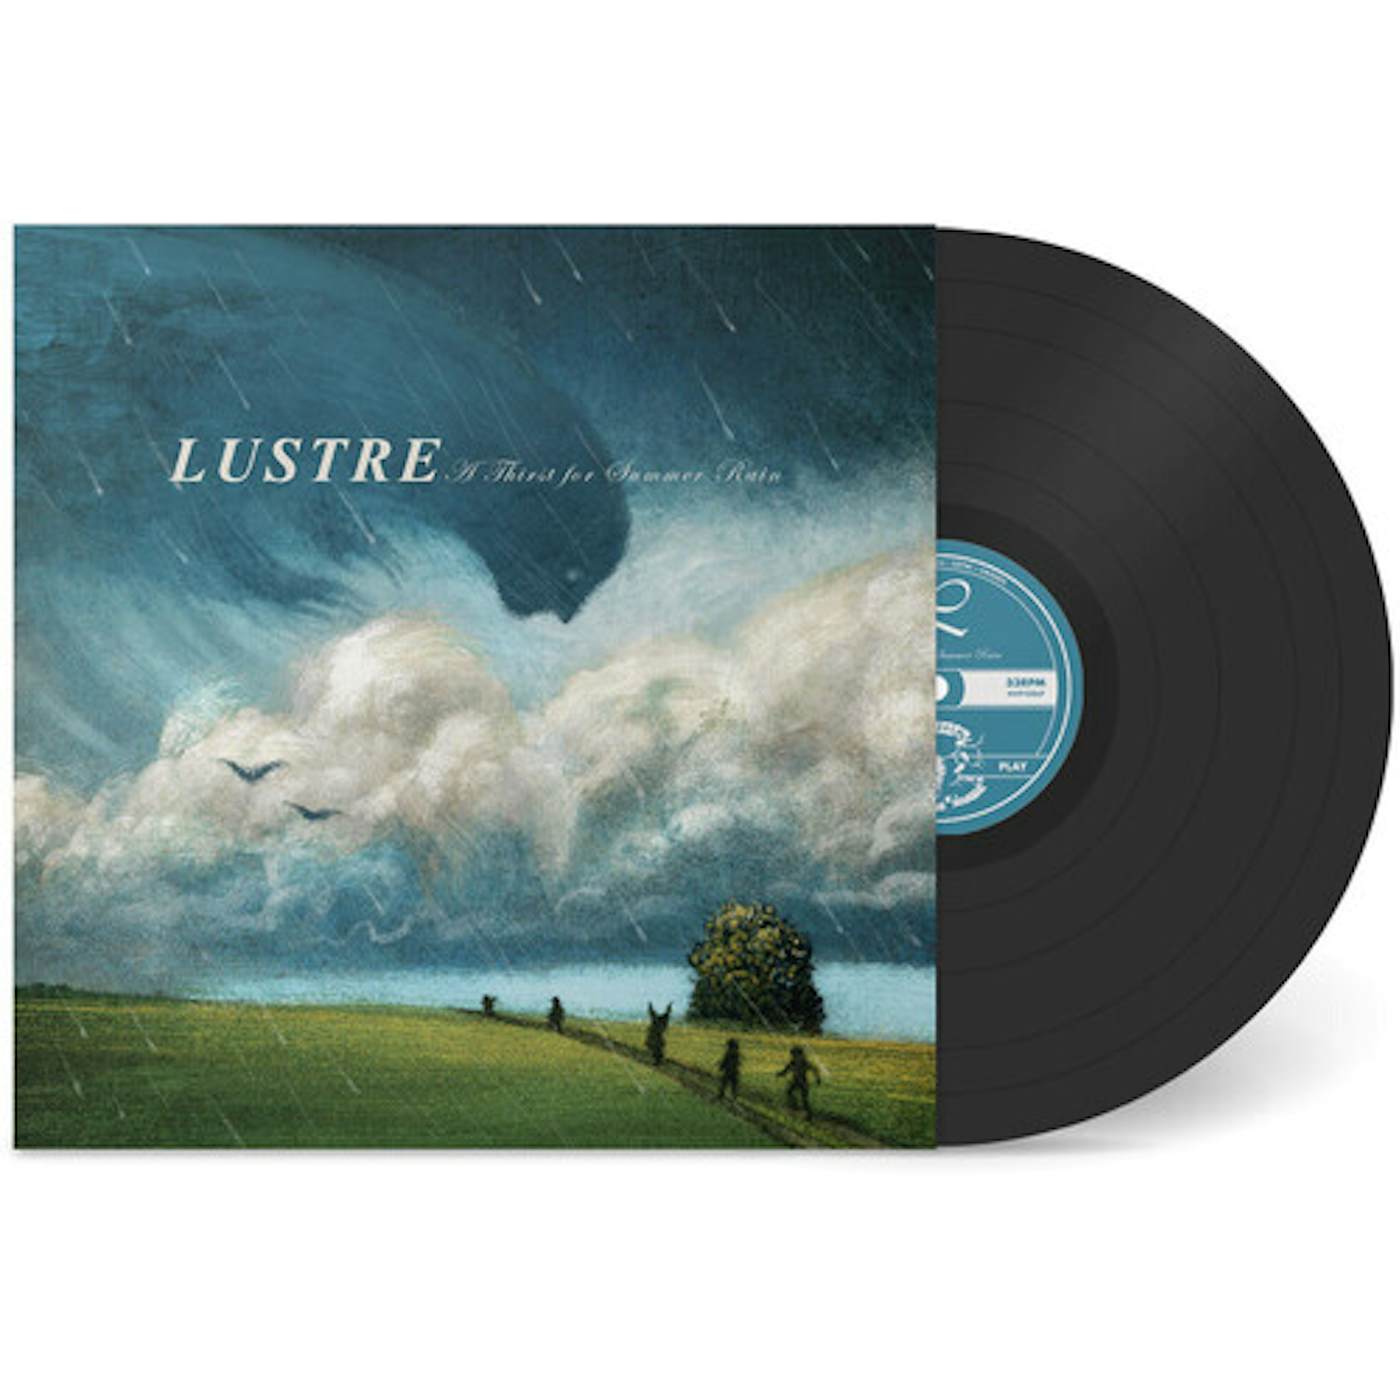 Lustre Thirst For Summer Rain Vinyl Record